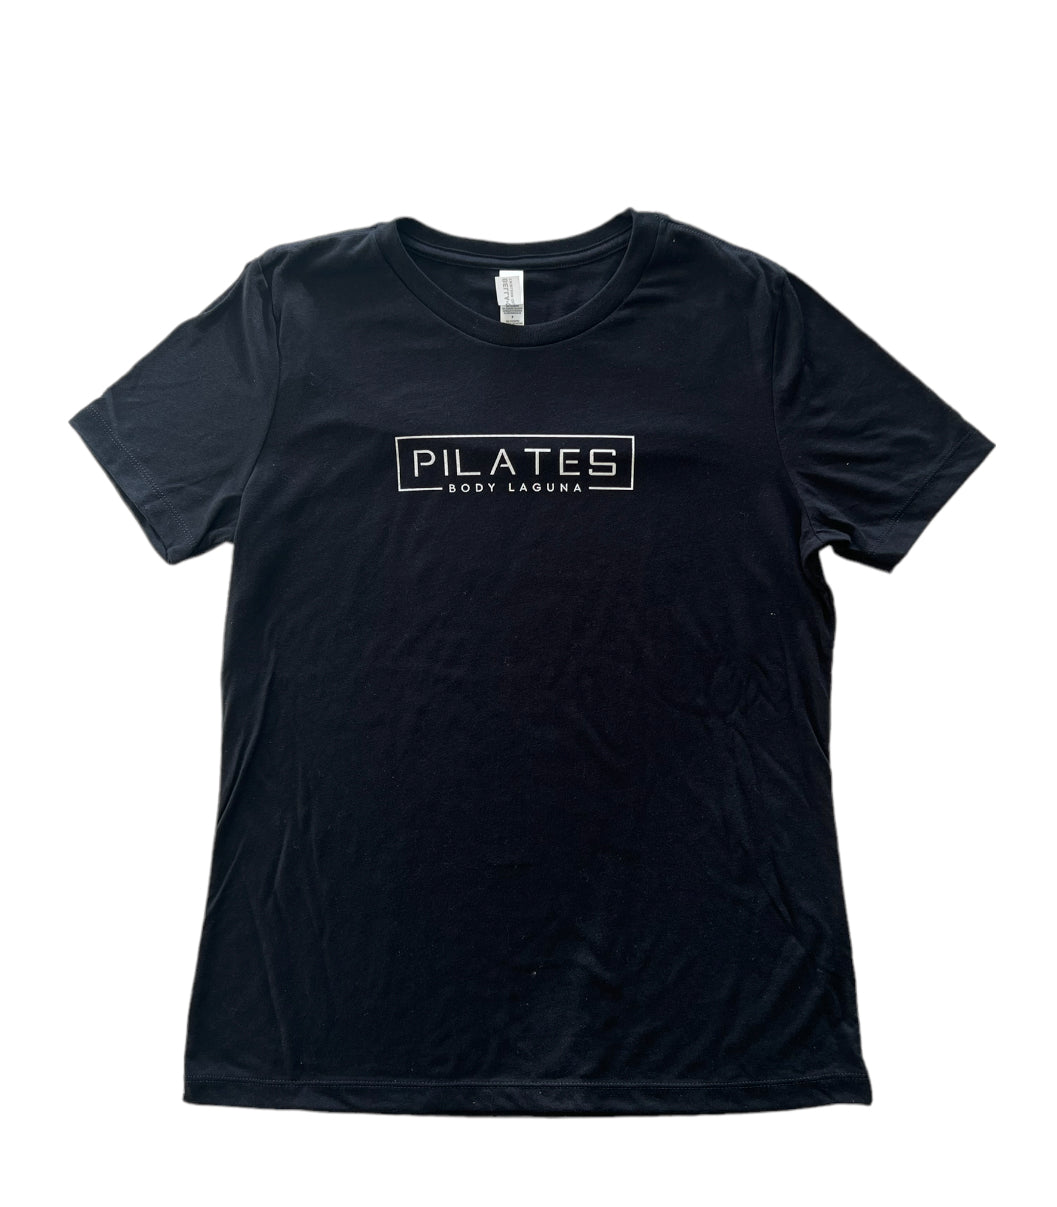 Pilates Body t-shirt